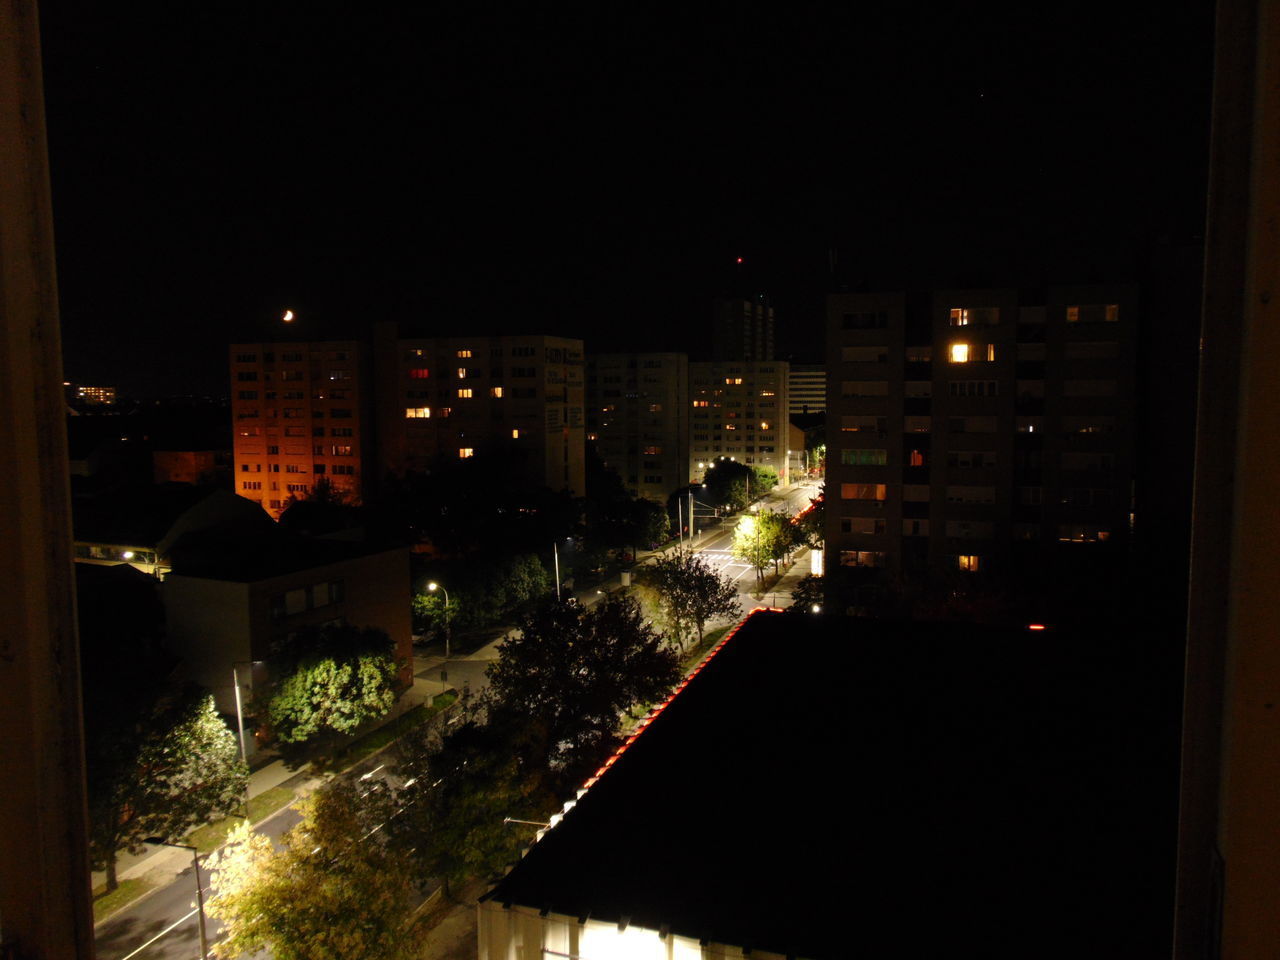 ILLUMINATED BUILDINGS AT NIGHT